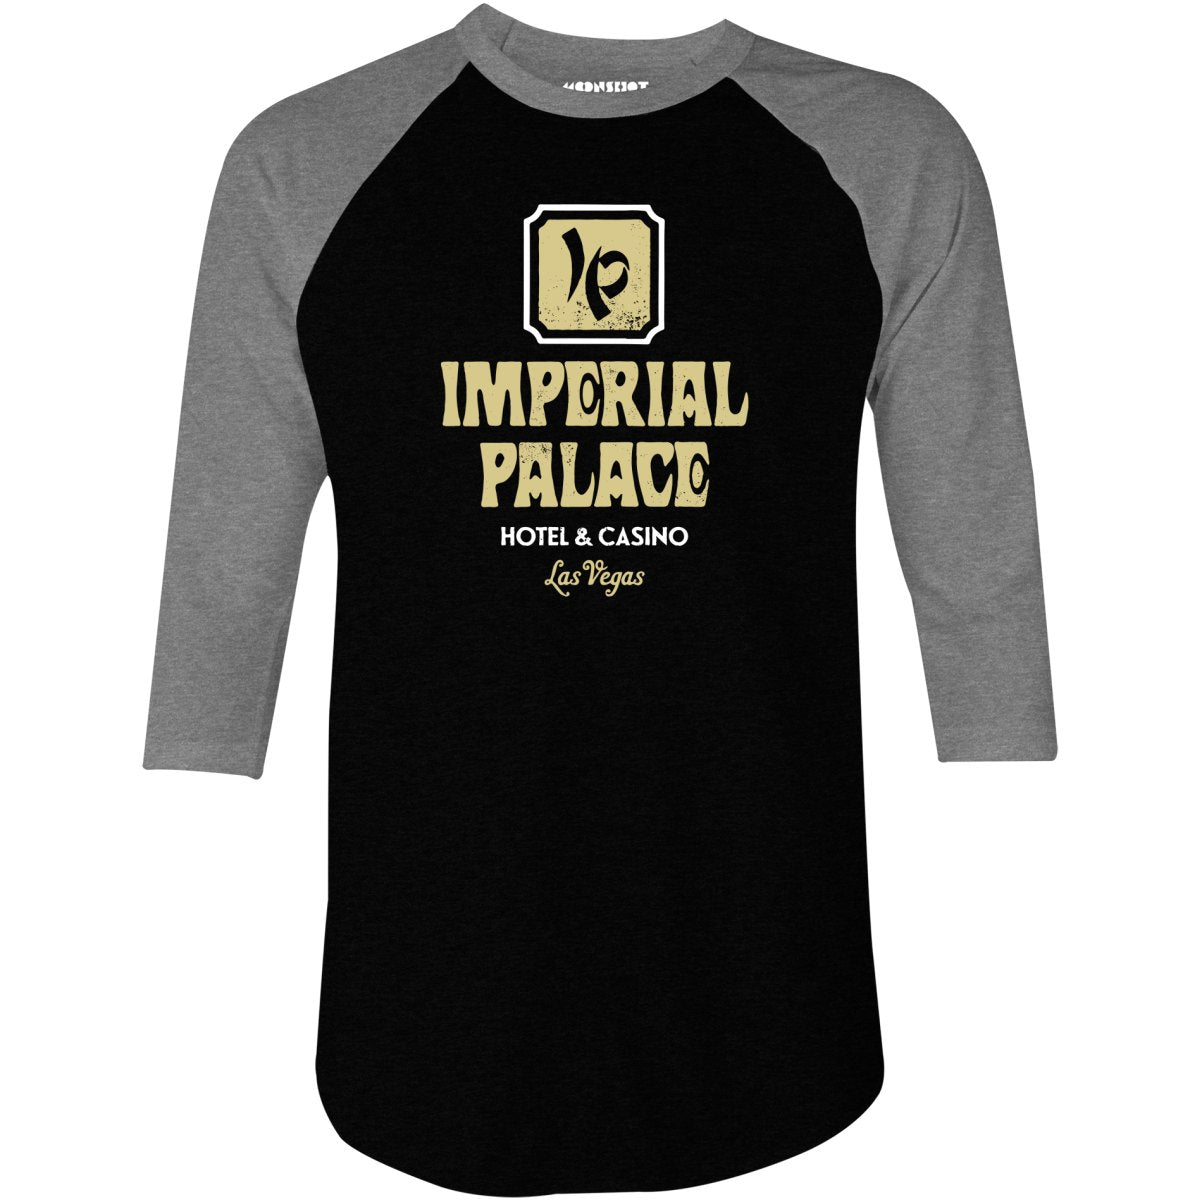 Imperial Palace Hotel & Casino - Vintage Las Vegas - 3/4 Sleeve Raglan T-Shirt